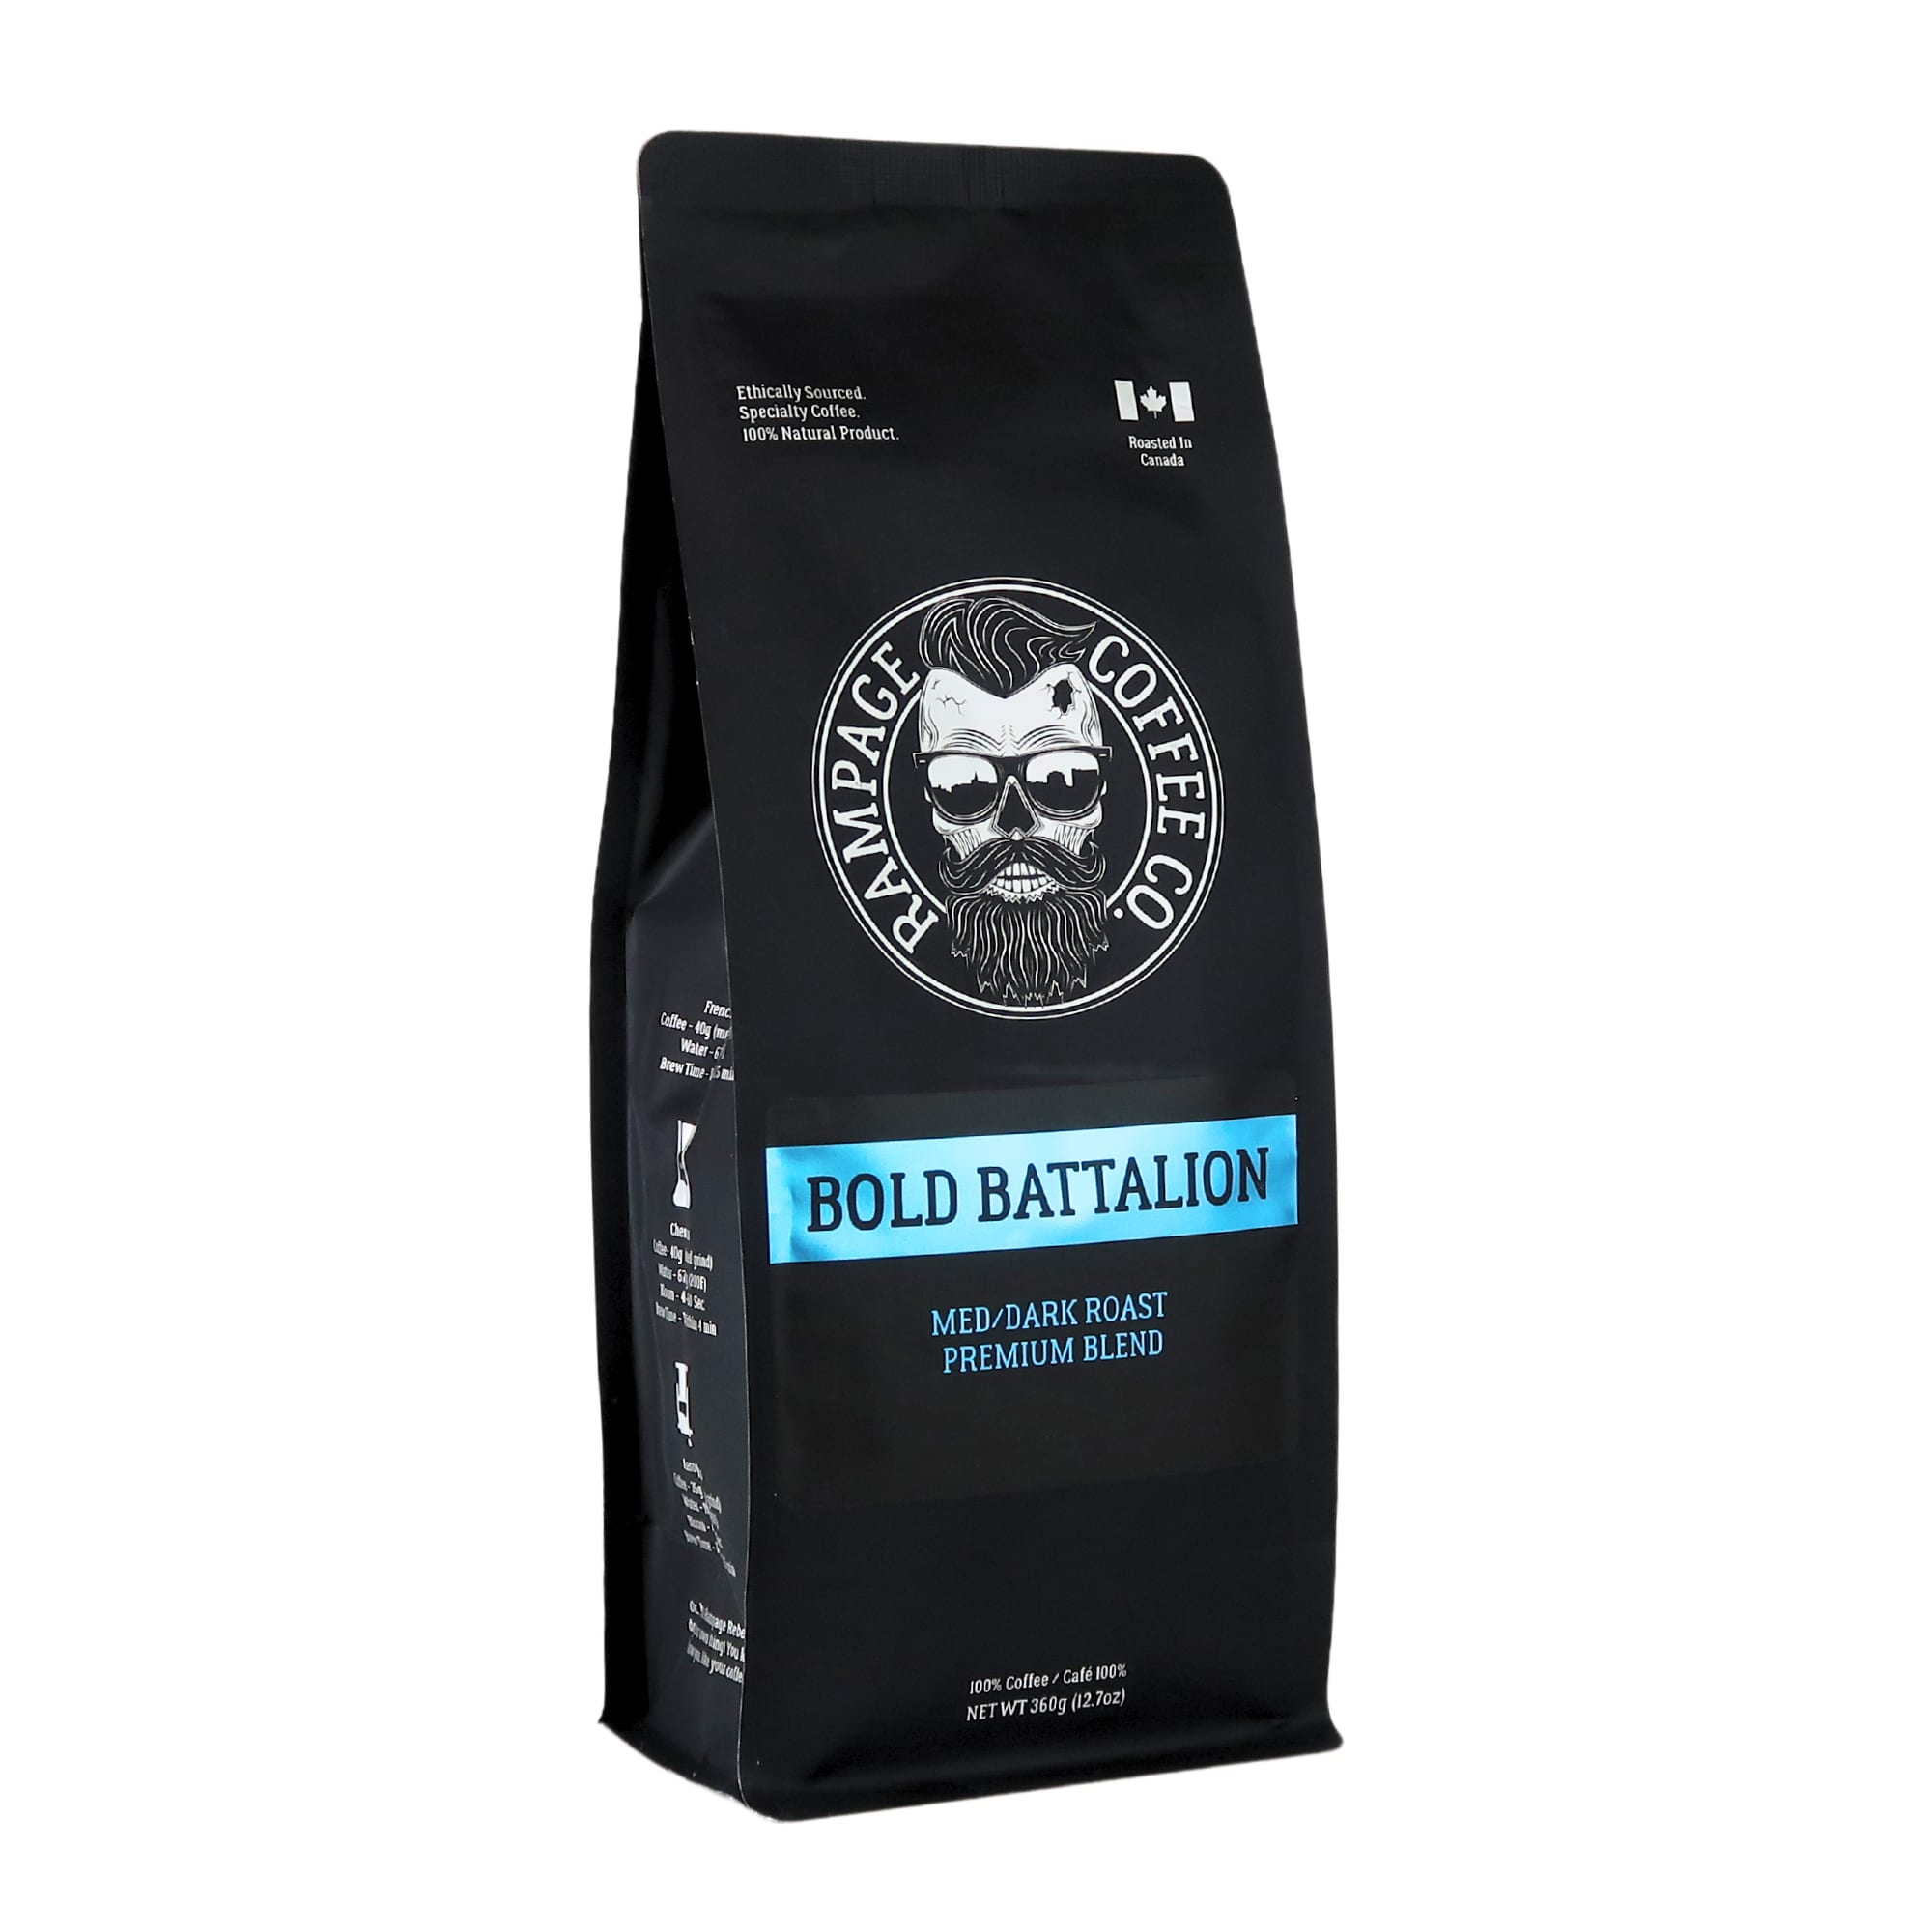 Rampage Coffee Co. BOLD BATTALION Medium/Dark Roast Premium Blend Coffee